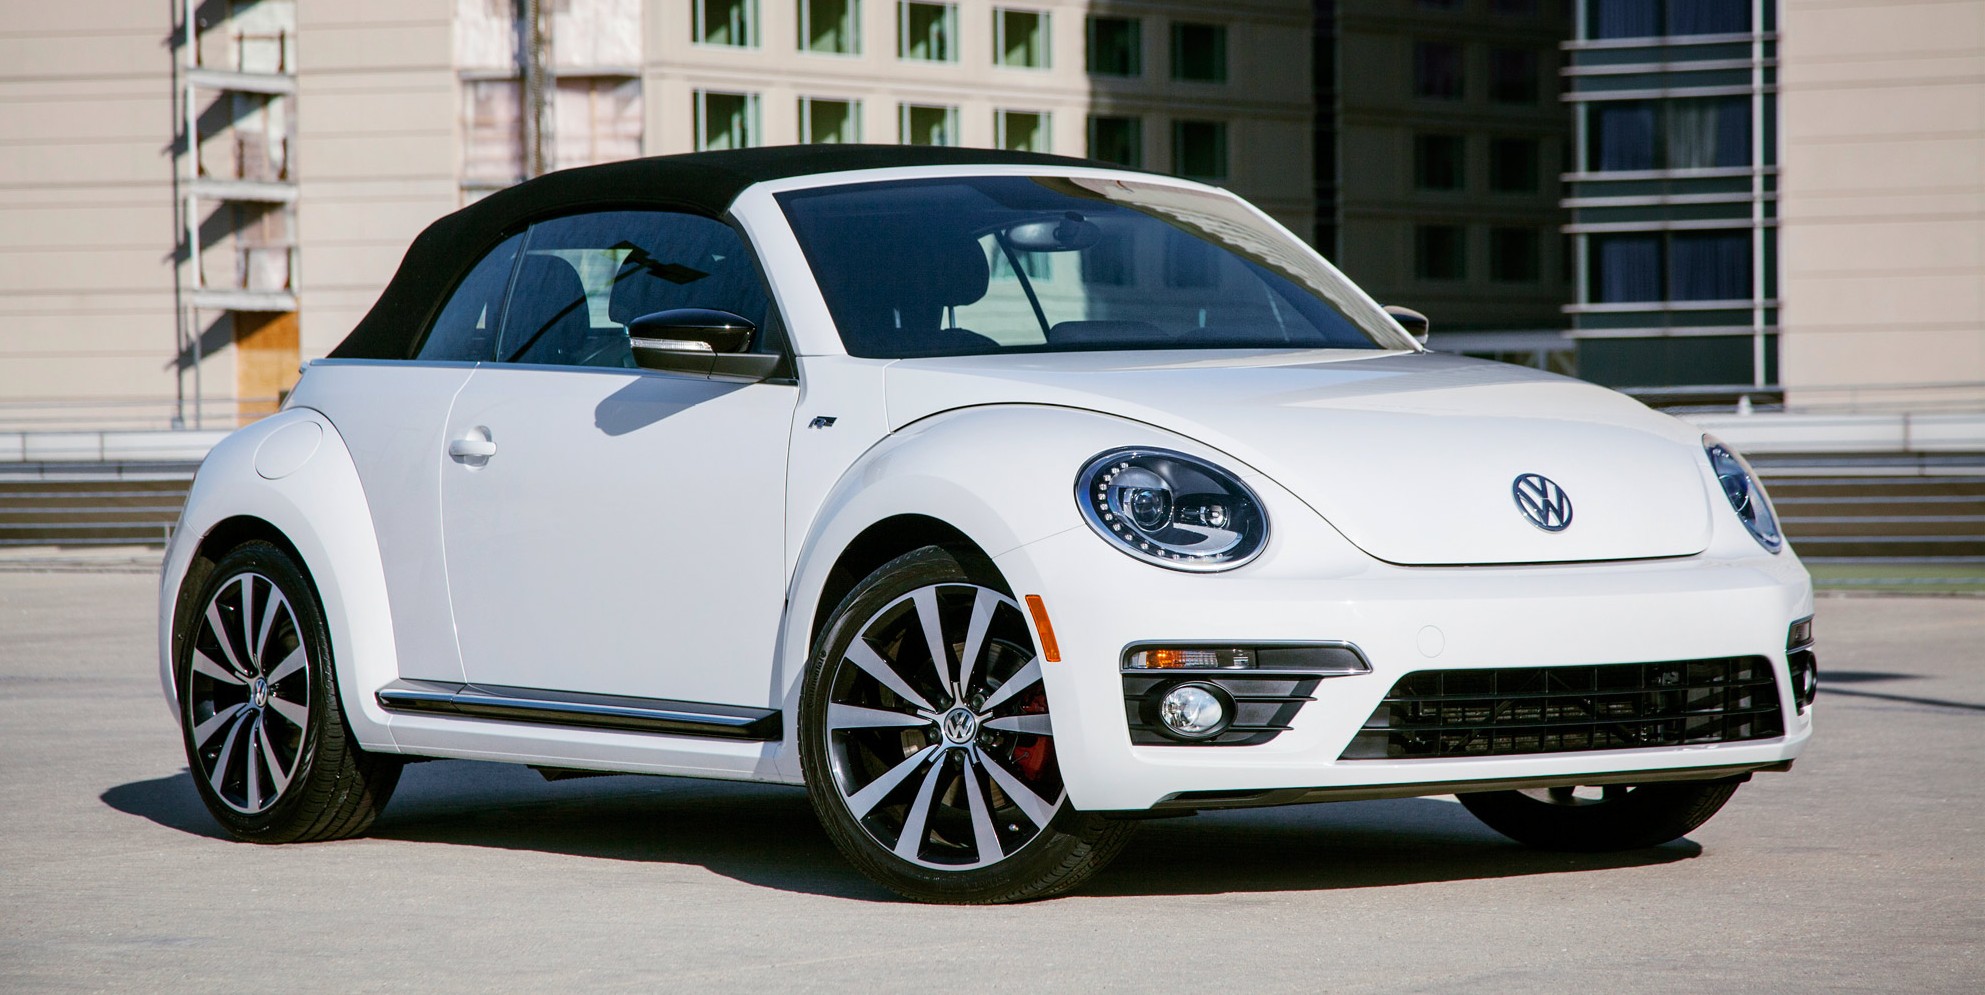 VW-Beetle-Convertible-R-Line-e1360172942917.jpg